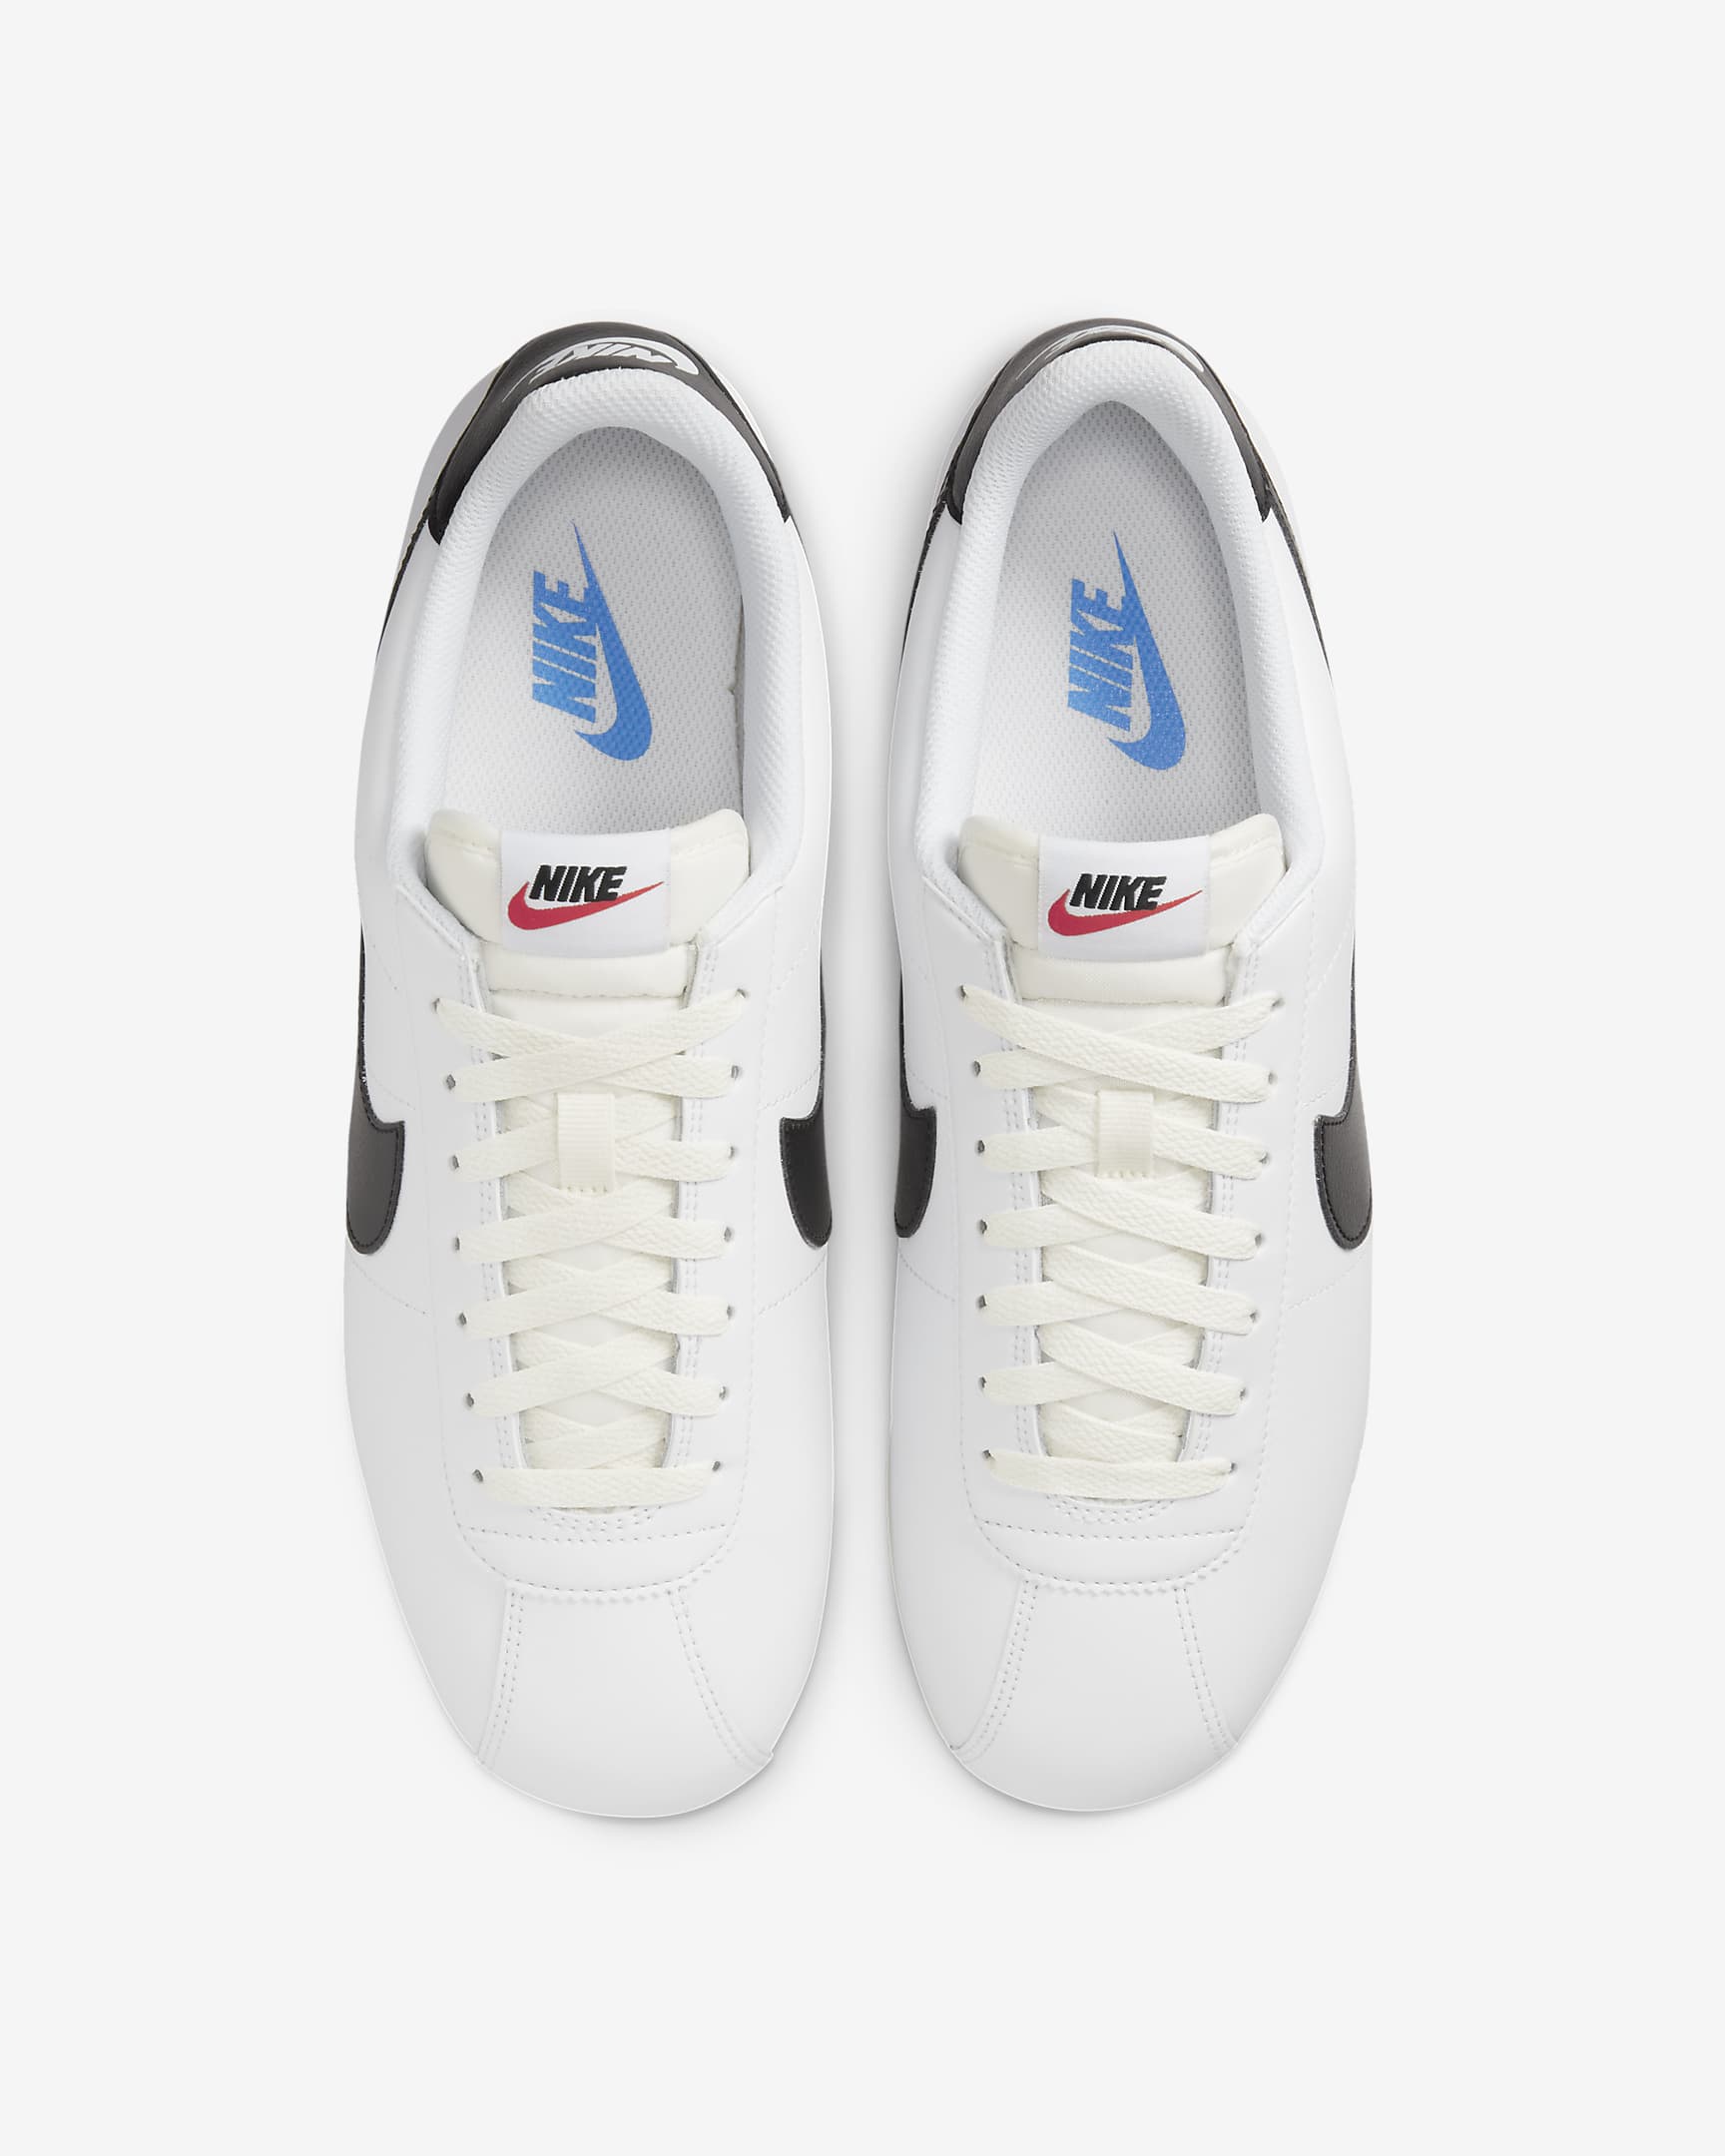 Nike Cortez Men's Shoes - White/Light Photo Blue/Sail/Black